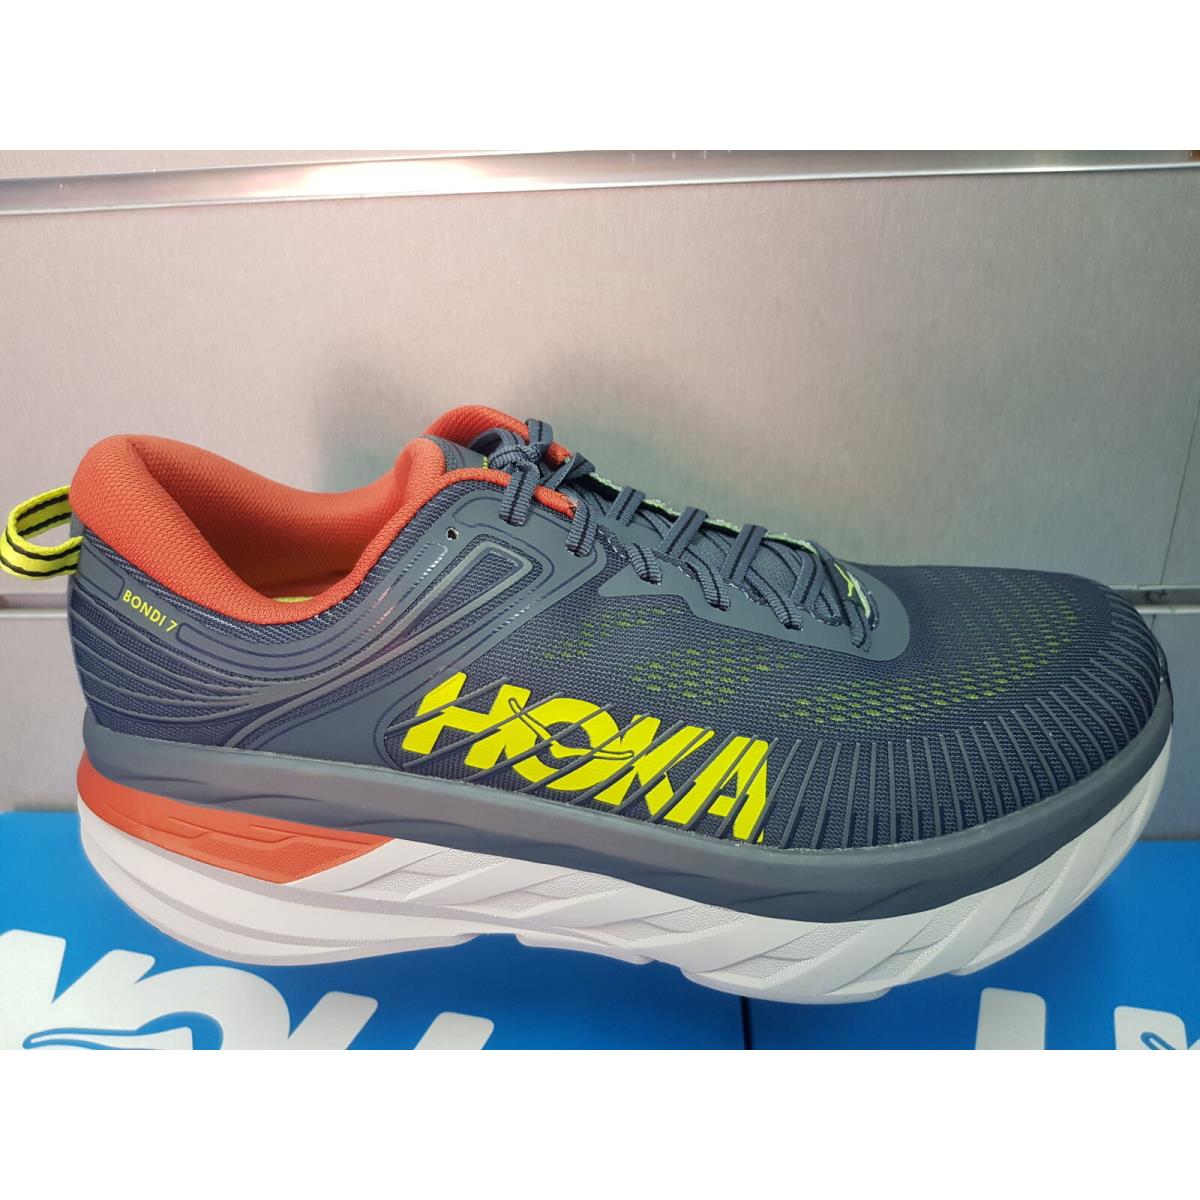 Hoka One One 1110518/TCHL Bondi 7 Grey/green Running Shoes For Men`s